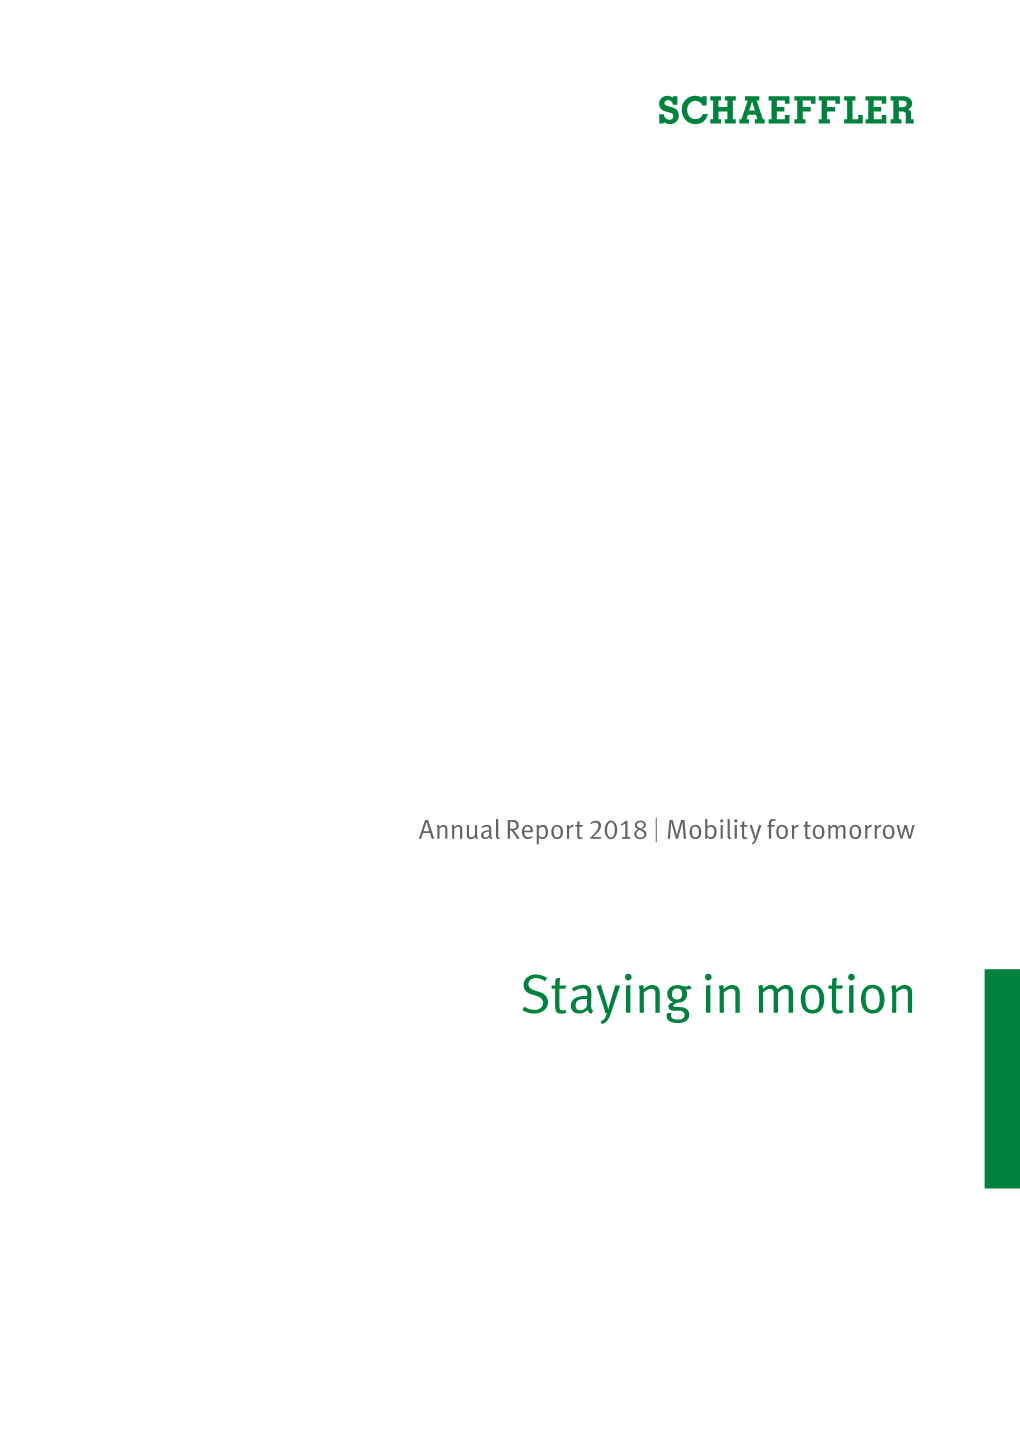 Schaeffler Annual Report 2018